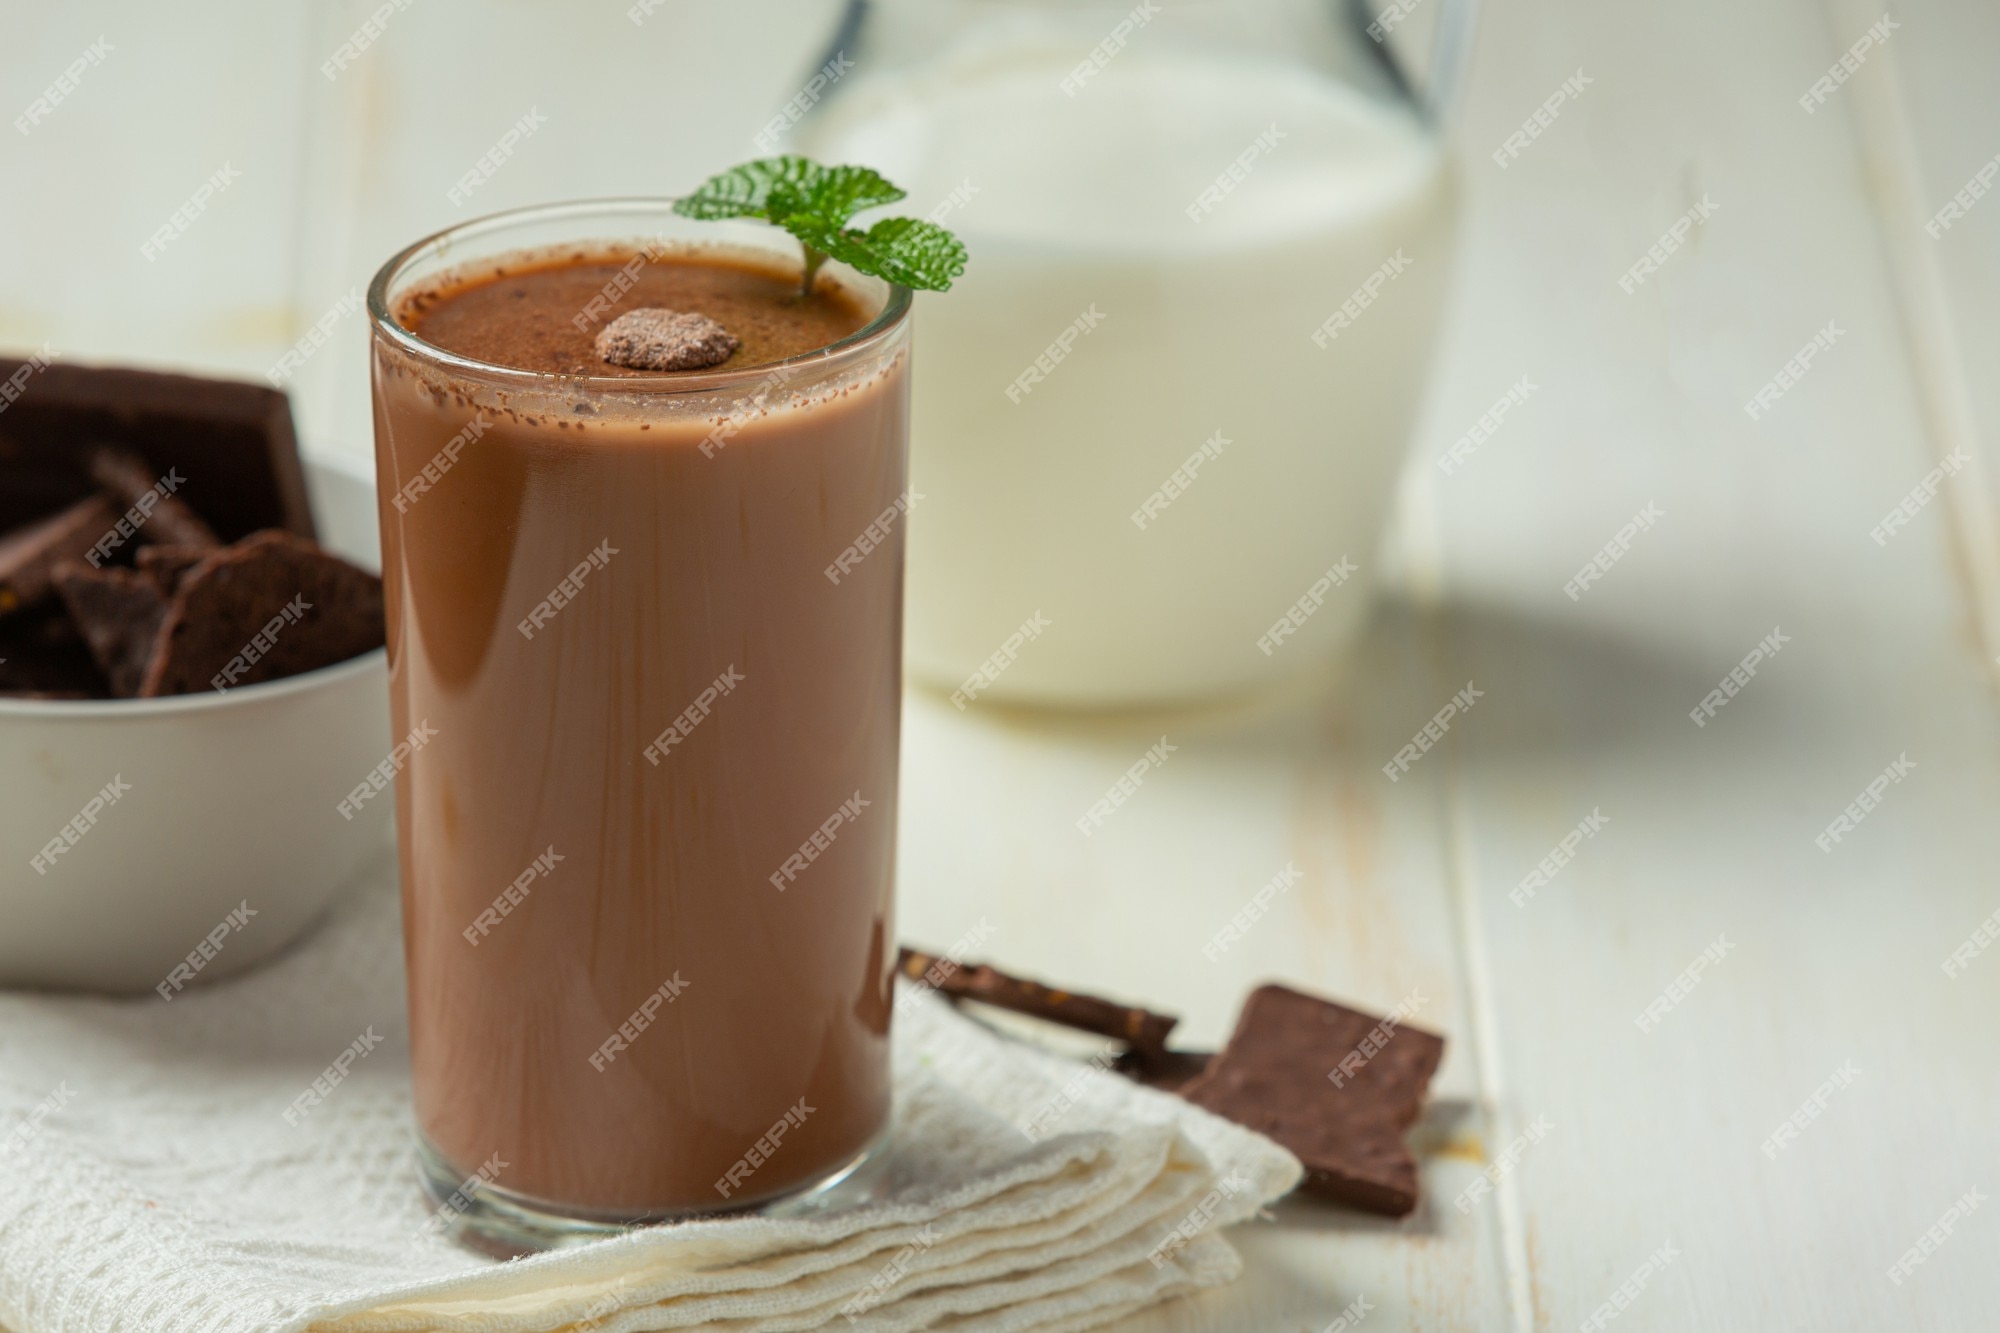 Chocolate Milk Drink Images - Free Download on Freepik